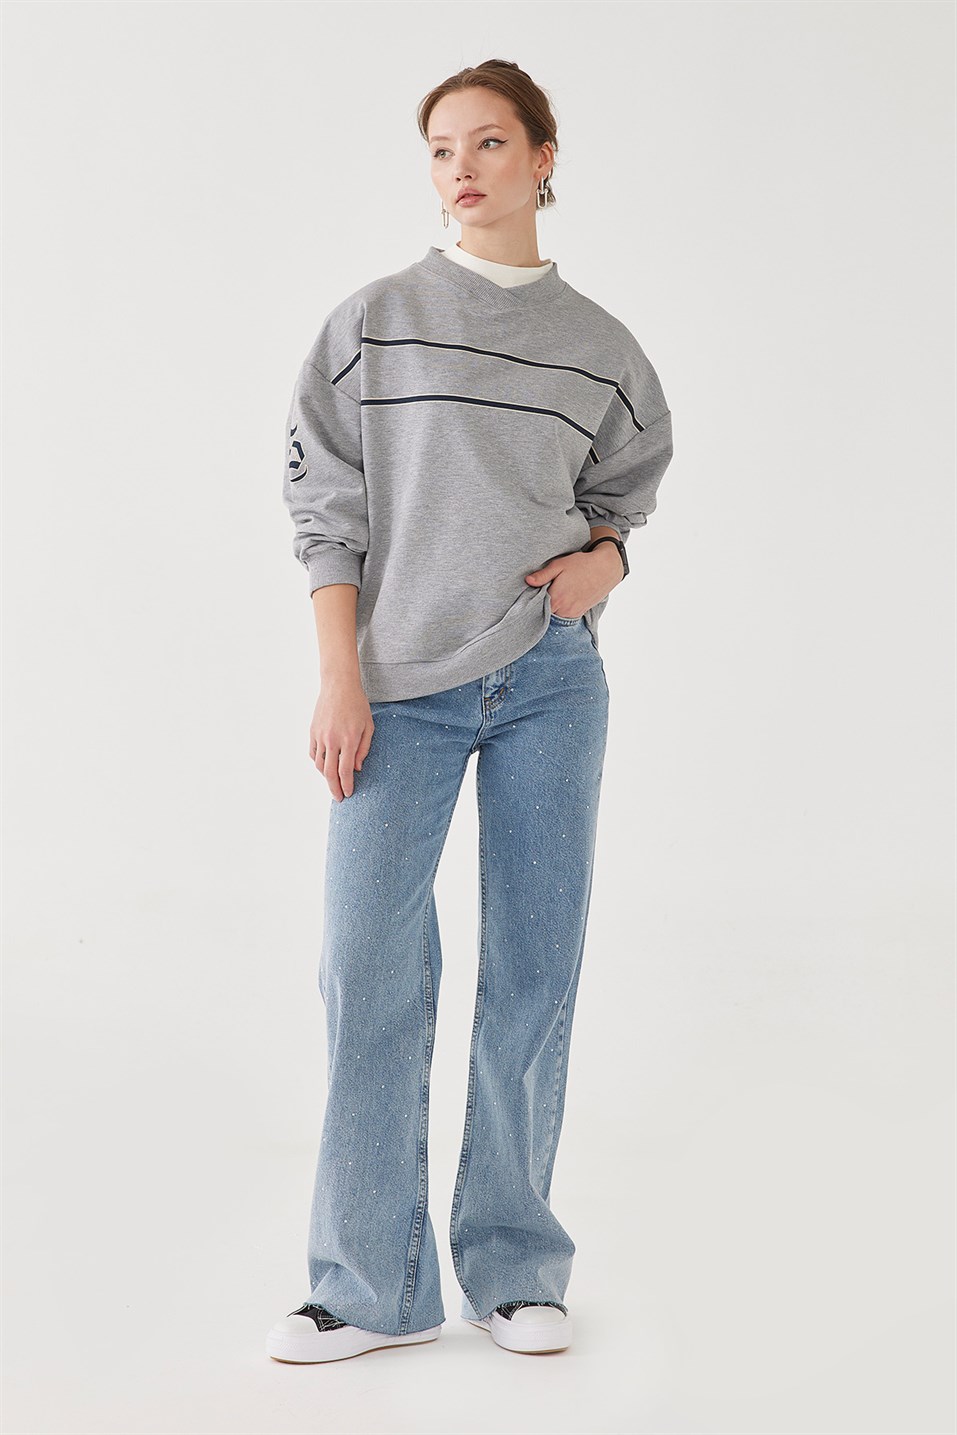 Grey Ns Cotton Sweatshirt